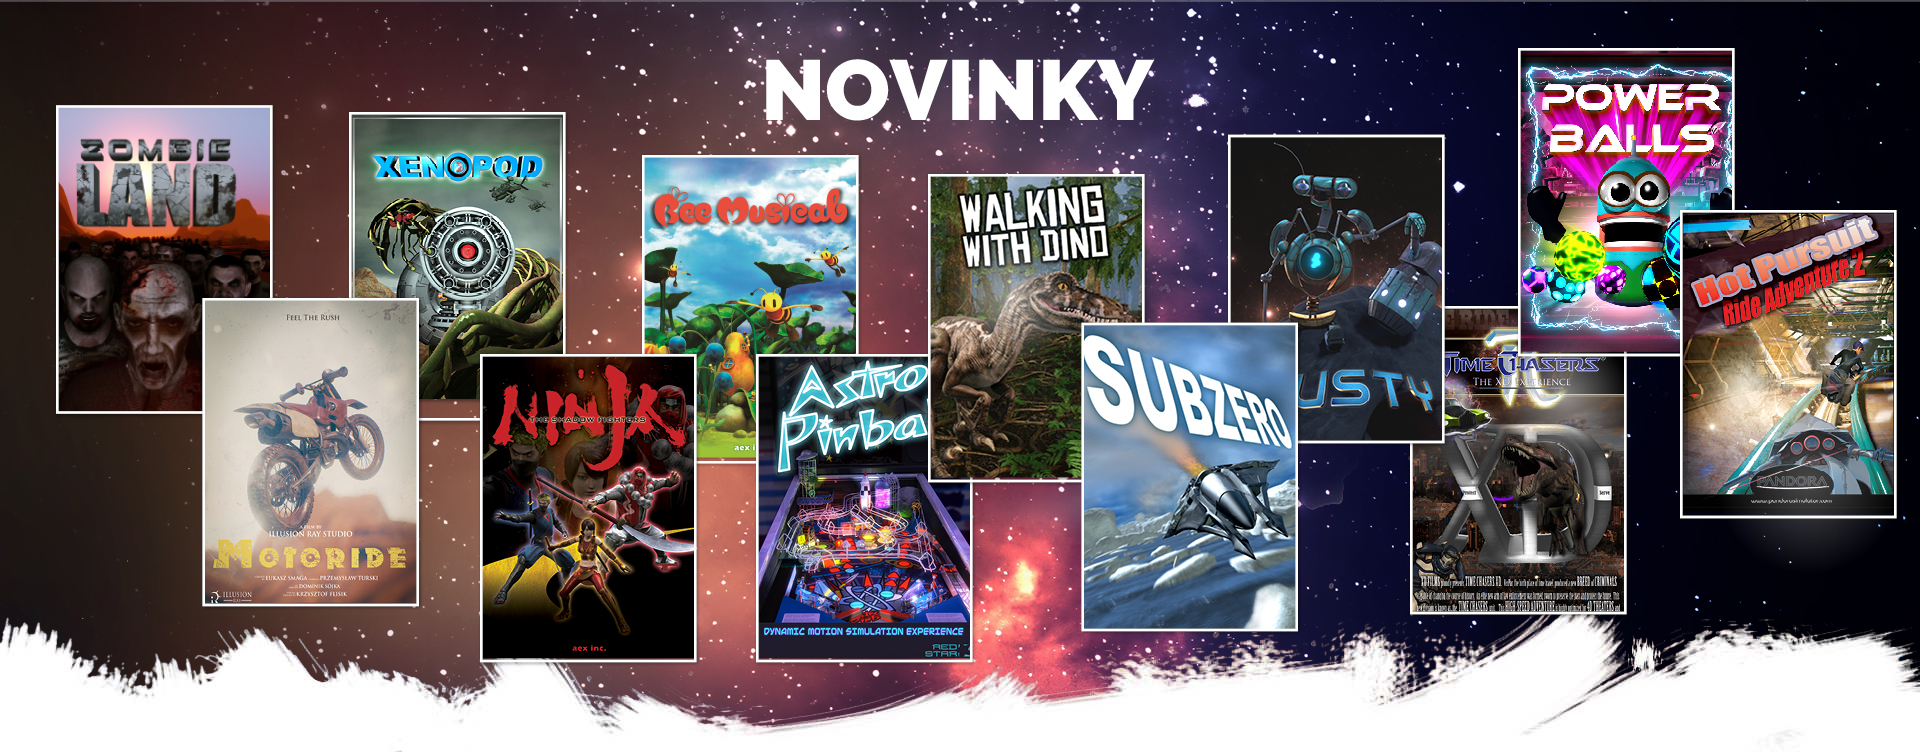 Novinky5D Cinema Maxim